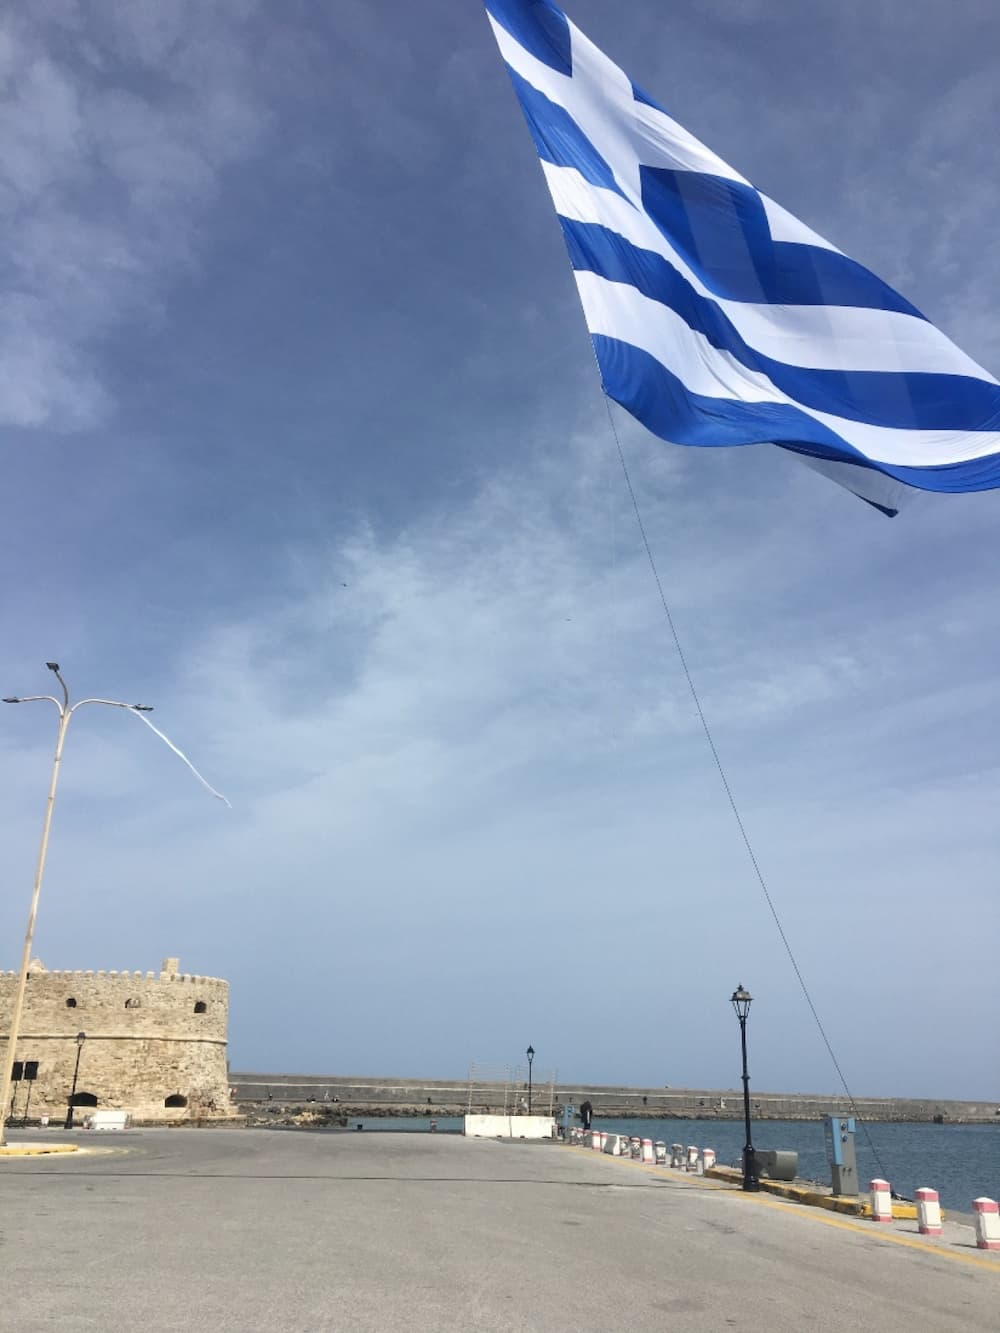 simea elliniki 2 1 - 25η Μαρτίου: Σημαία 1,5 στρέμμα υψώθηκε στο λιμάνι του Ηρακλείου (εικόνα)